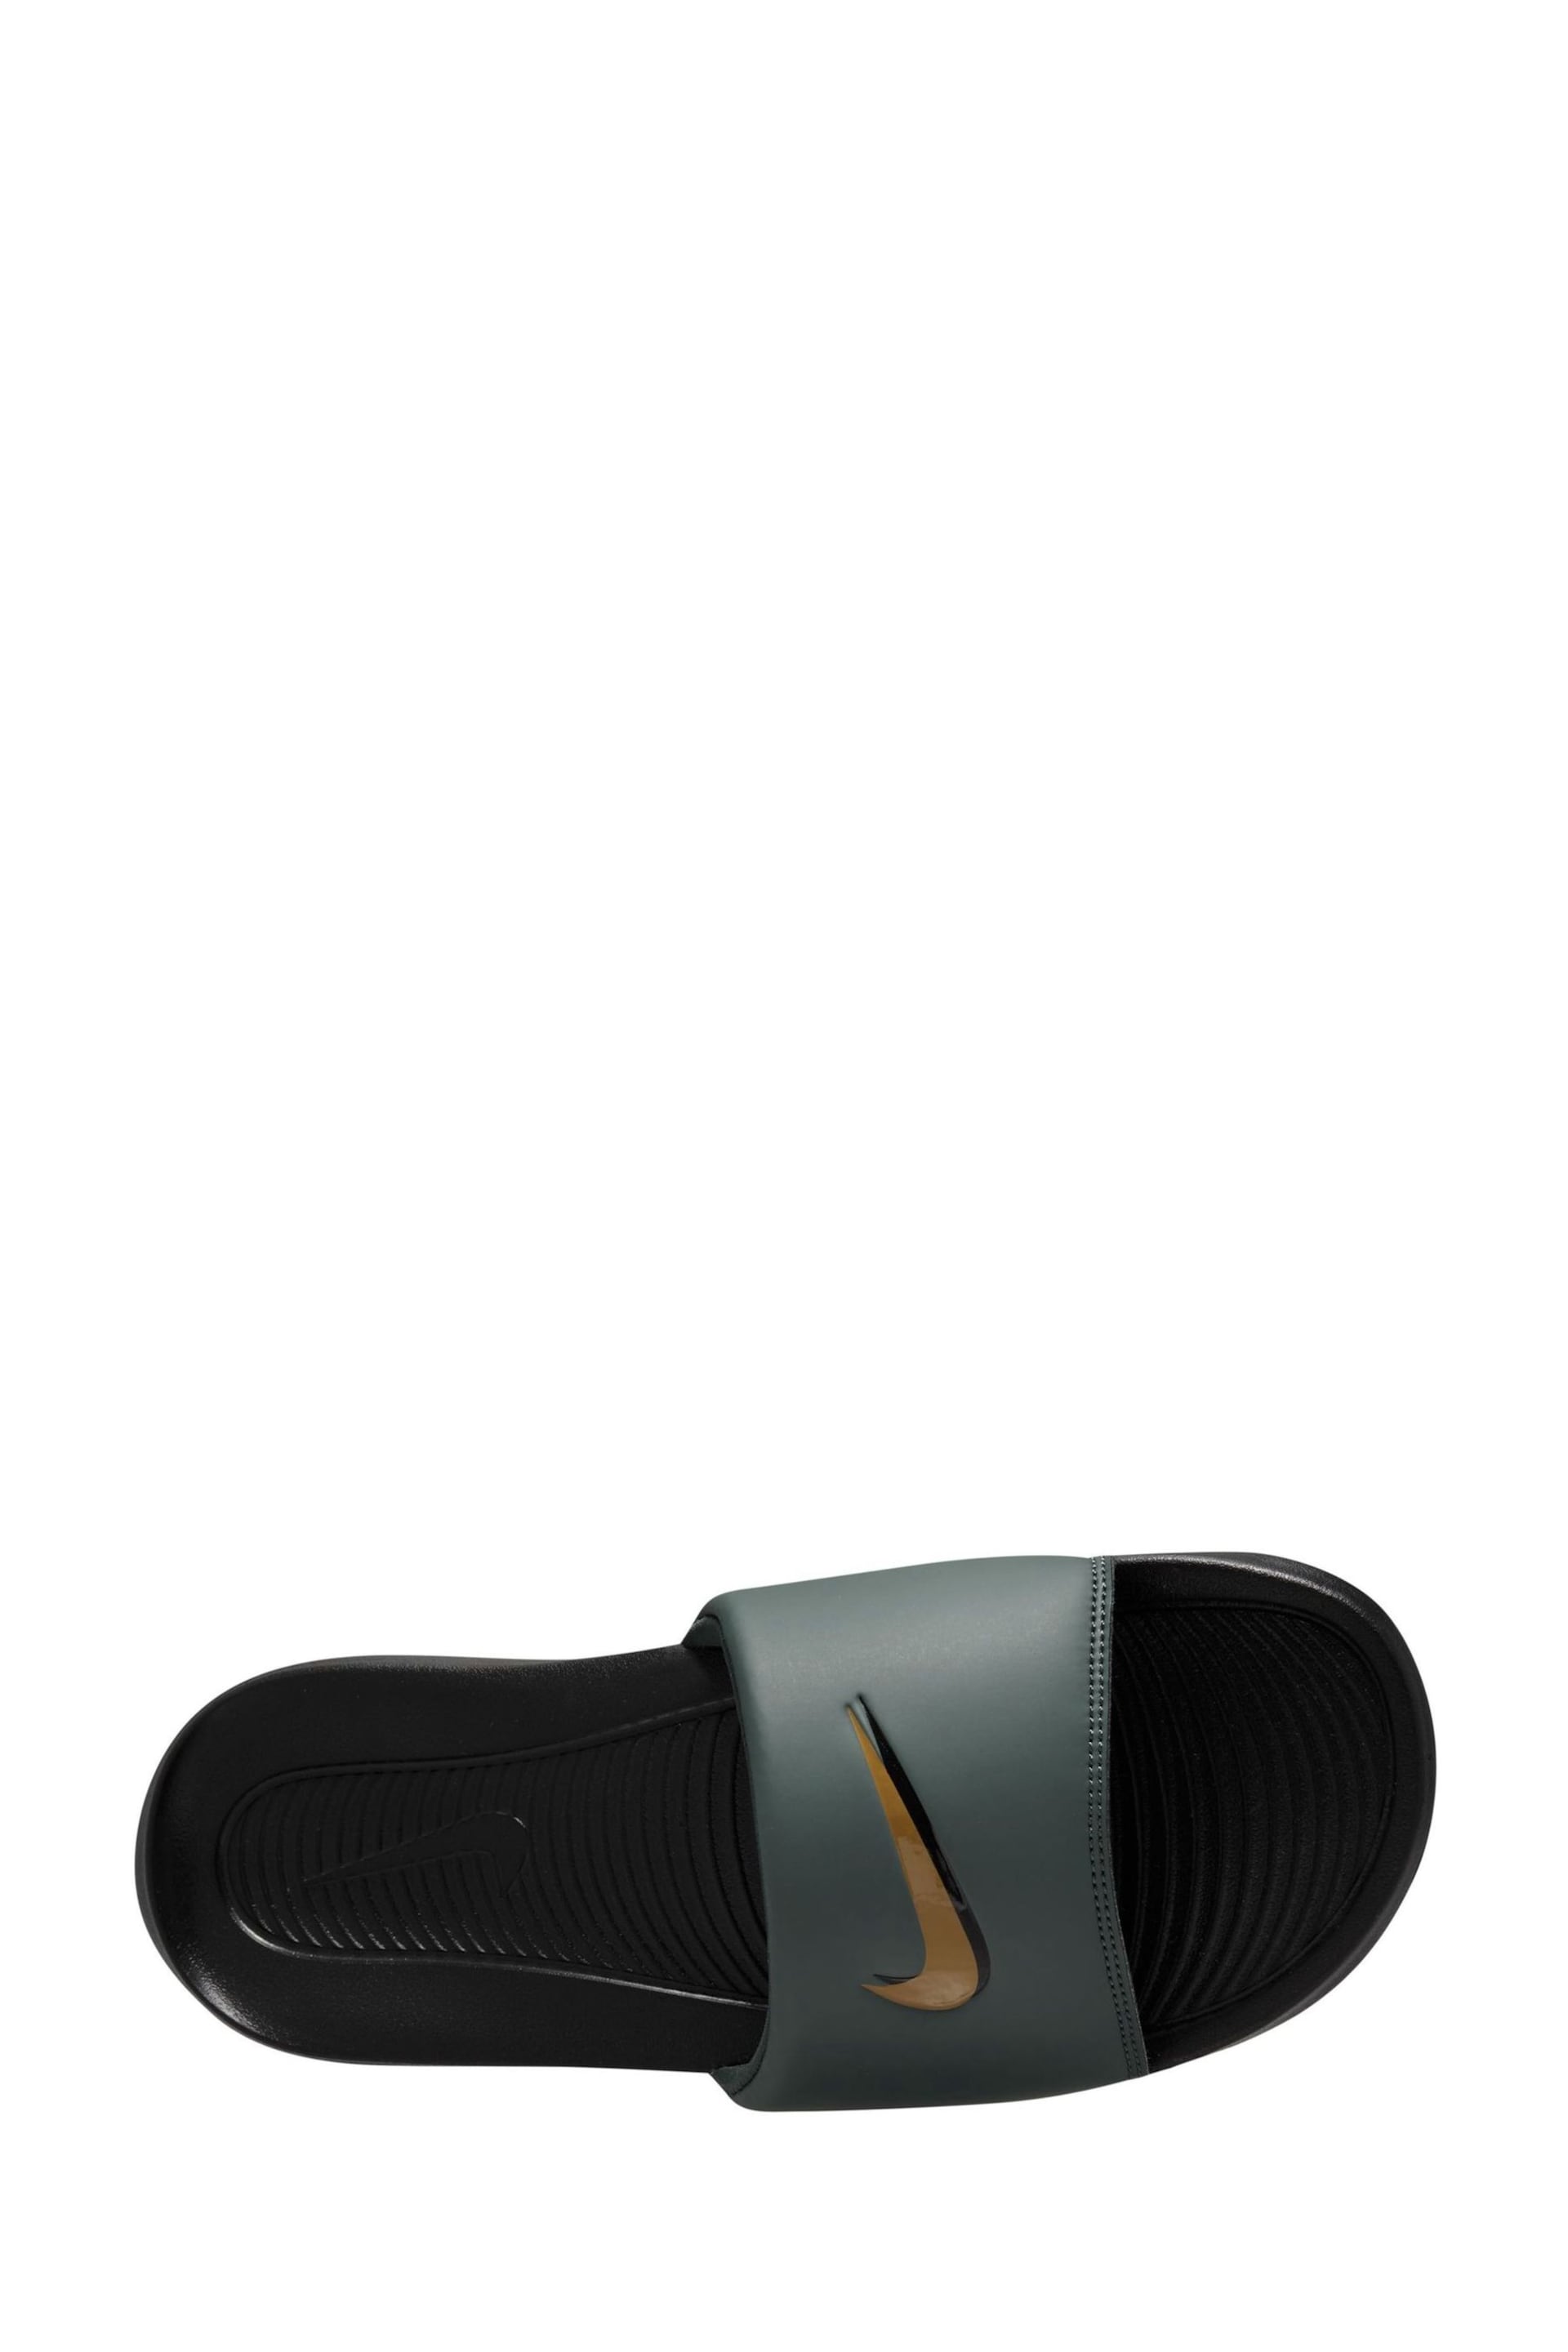 Nike Black Victori One Sliders - Image 6 of 8